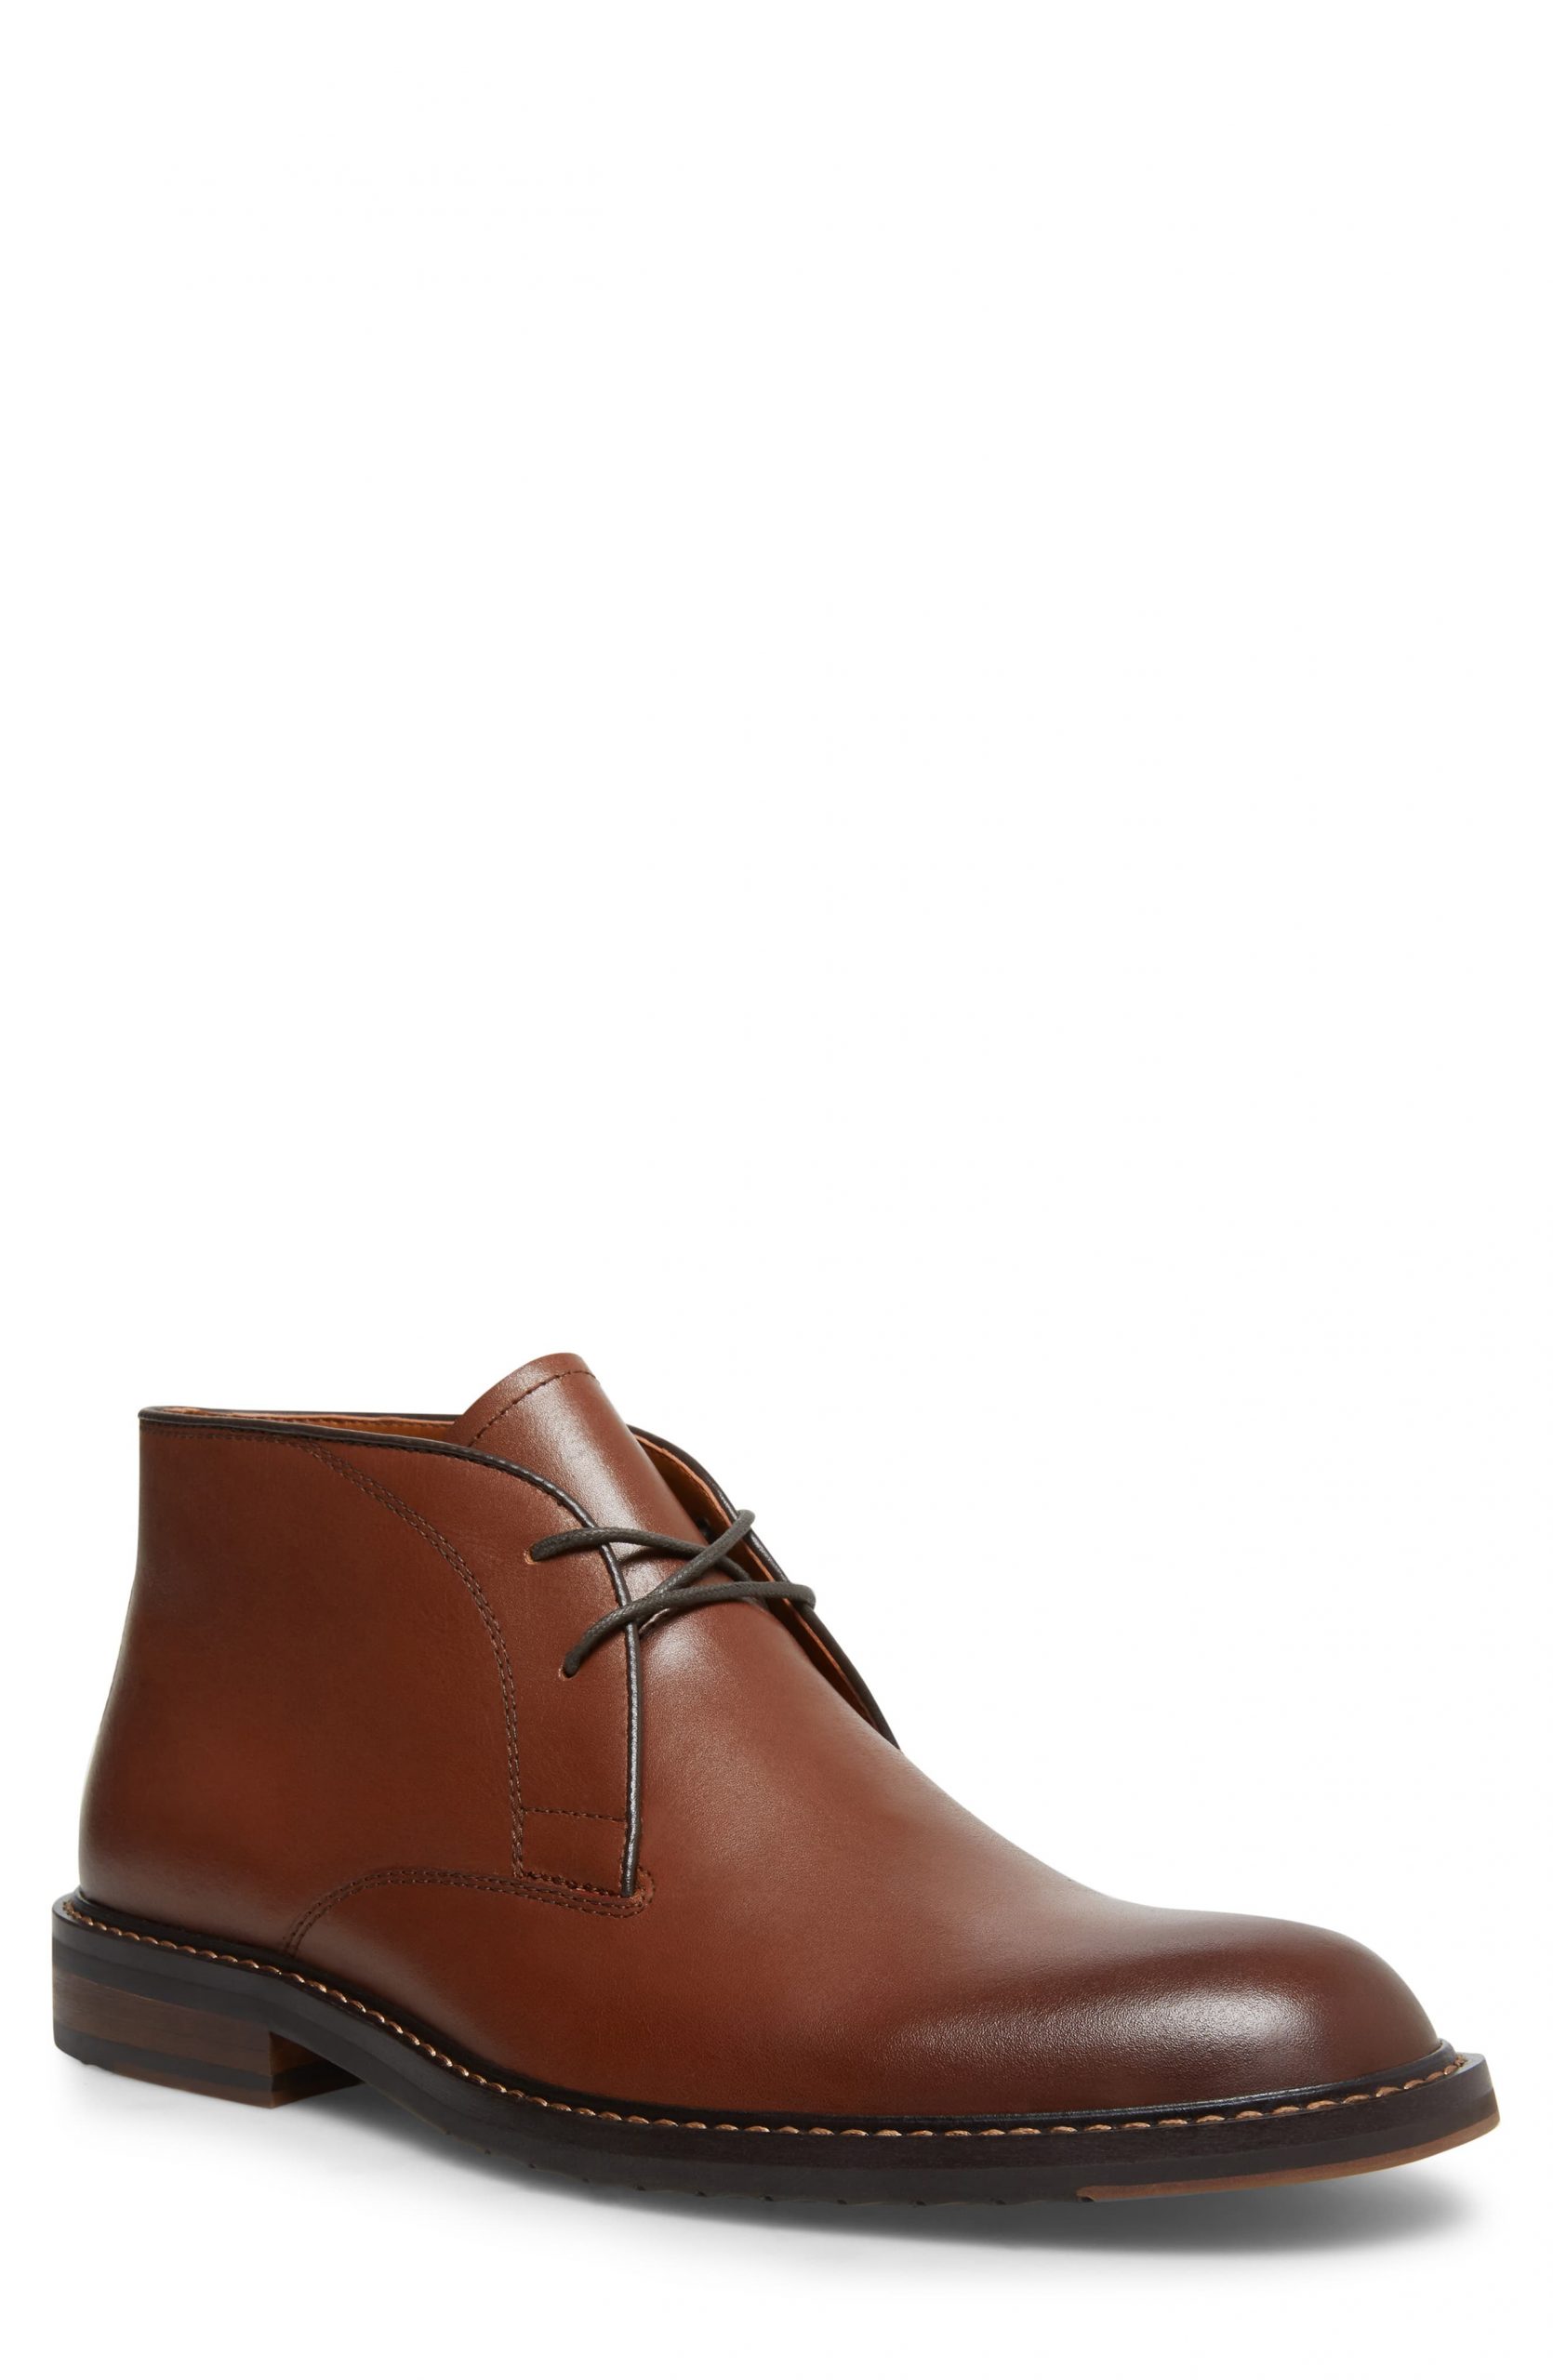 Men’s Steve Madden Bustur Chukka Boot, Size 8 M – Brown | The Fashionisto1670 x 2560